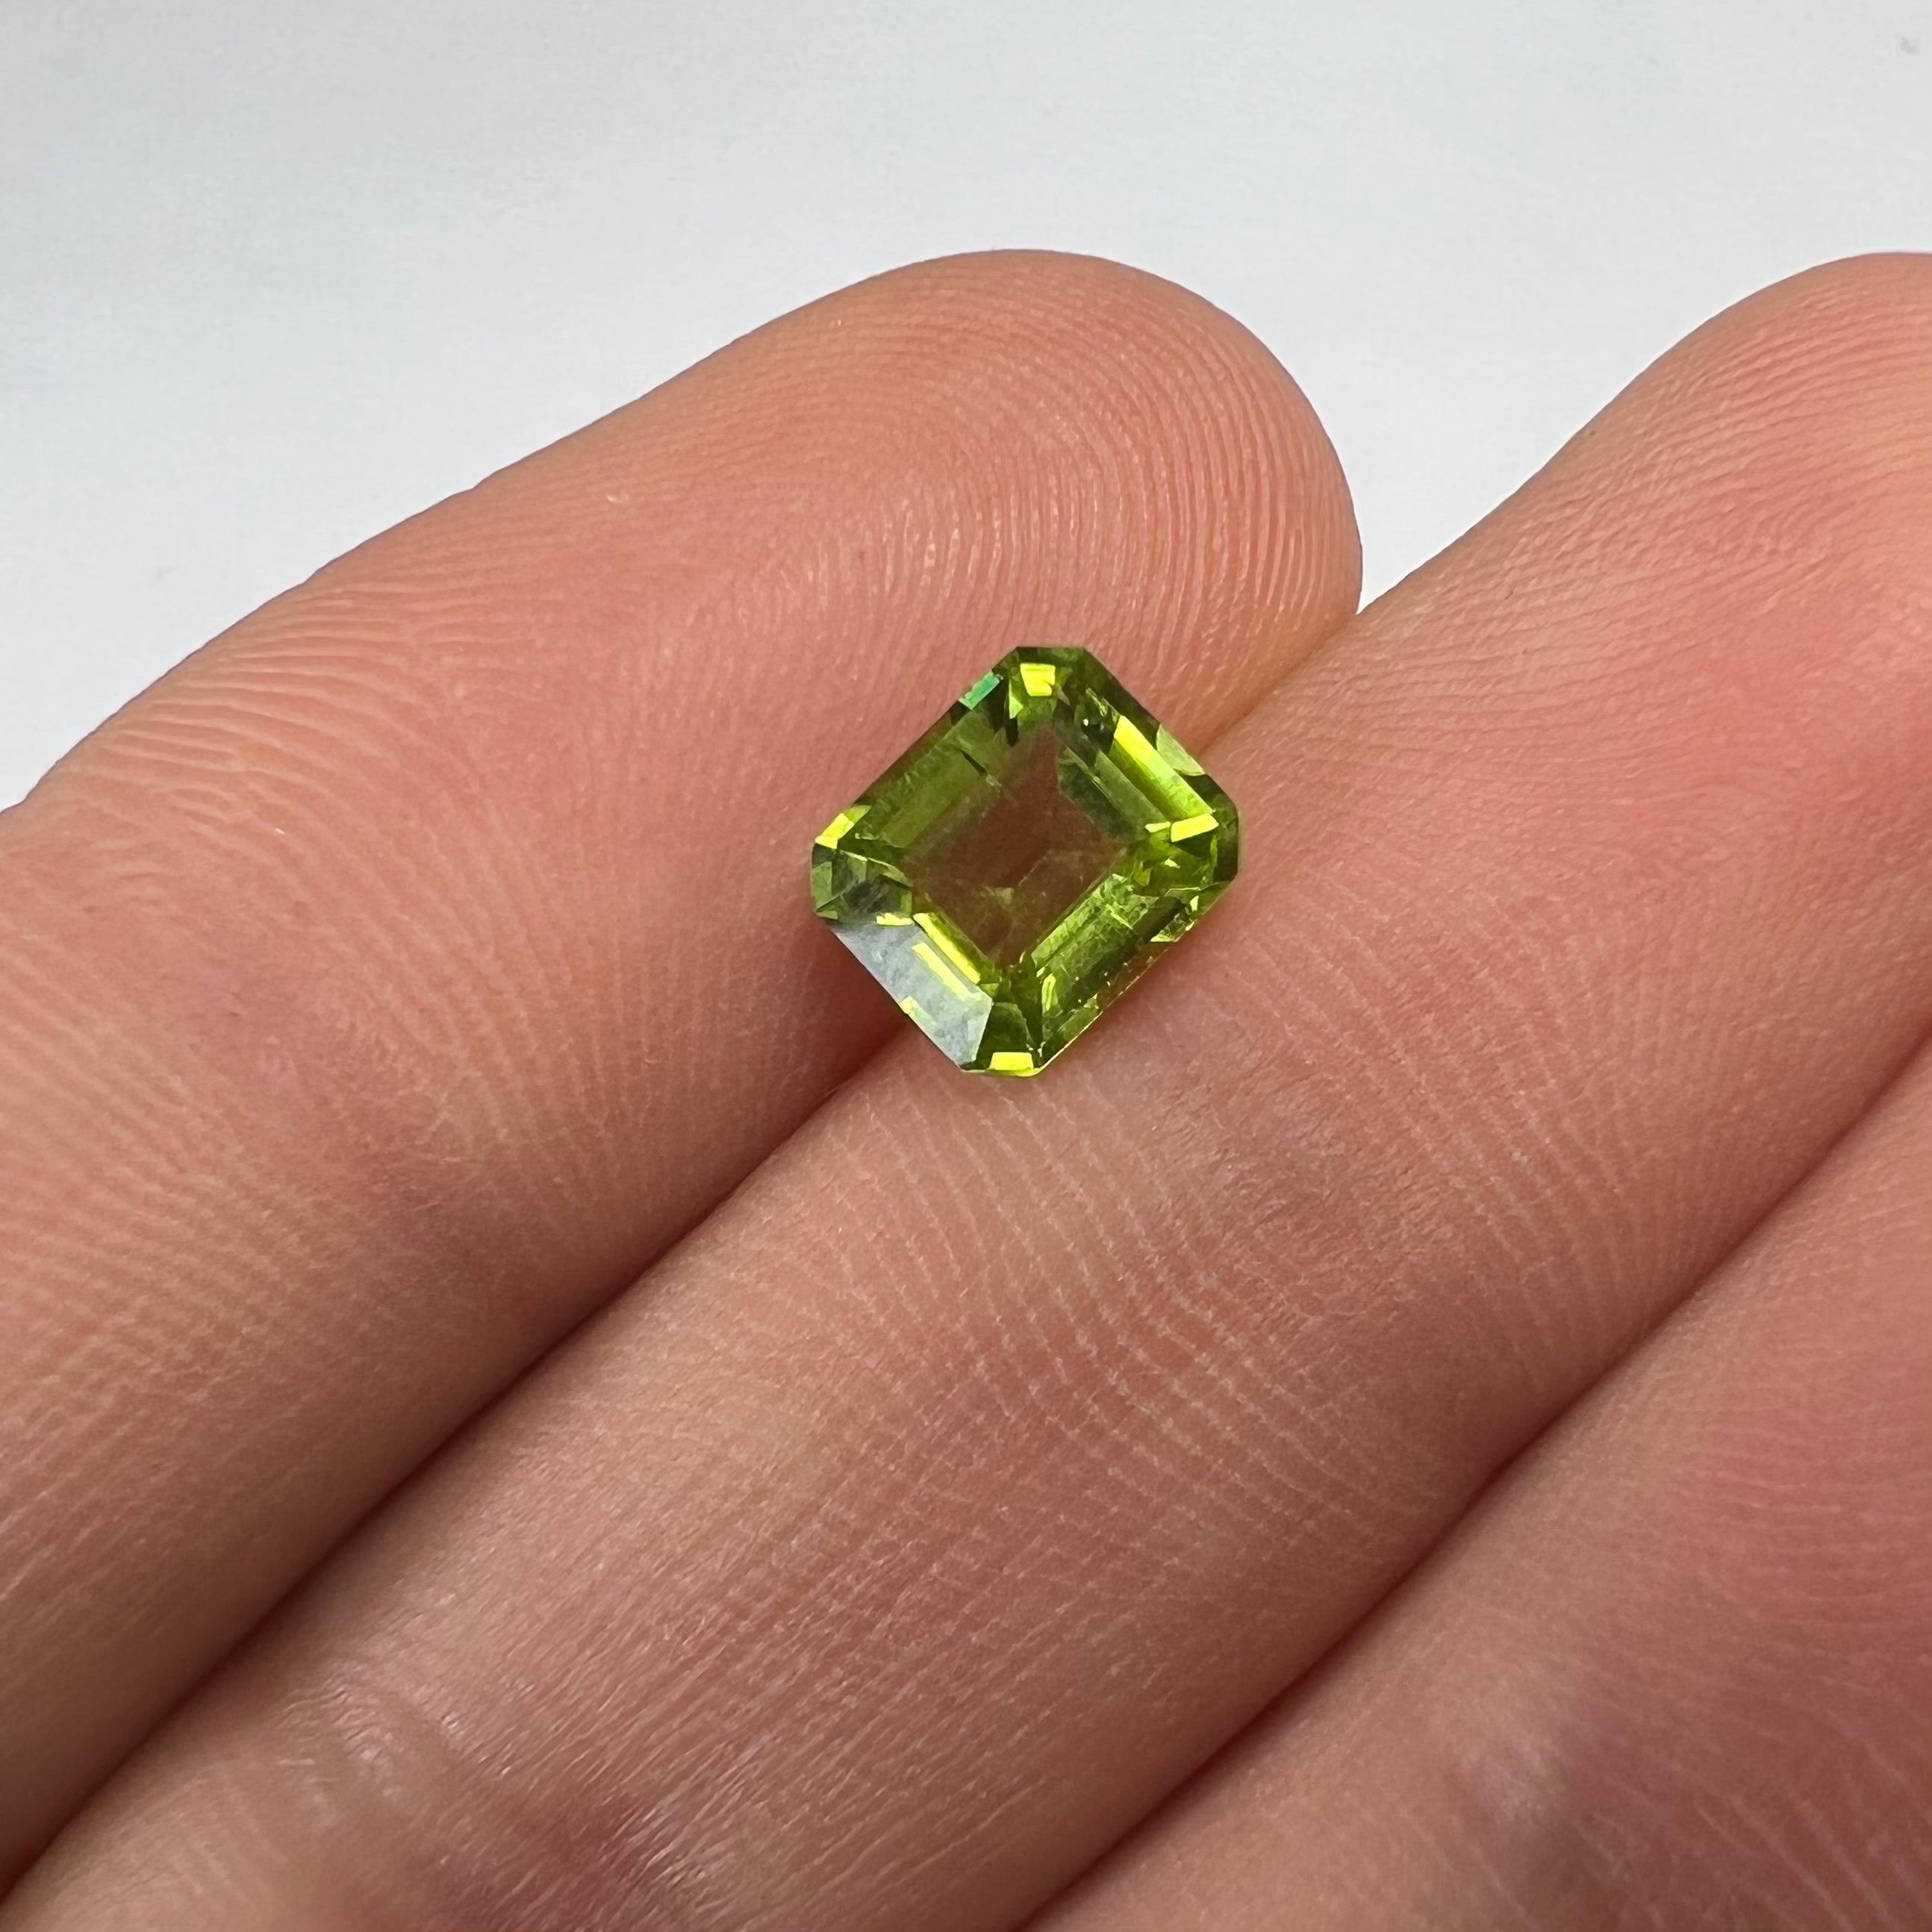 1.43CTW Loose Natural Emerald Cut Peridot 7.25x6.17x3.77mm Earth mined Gemstone